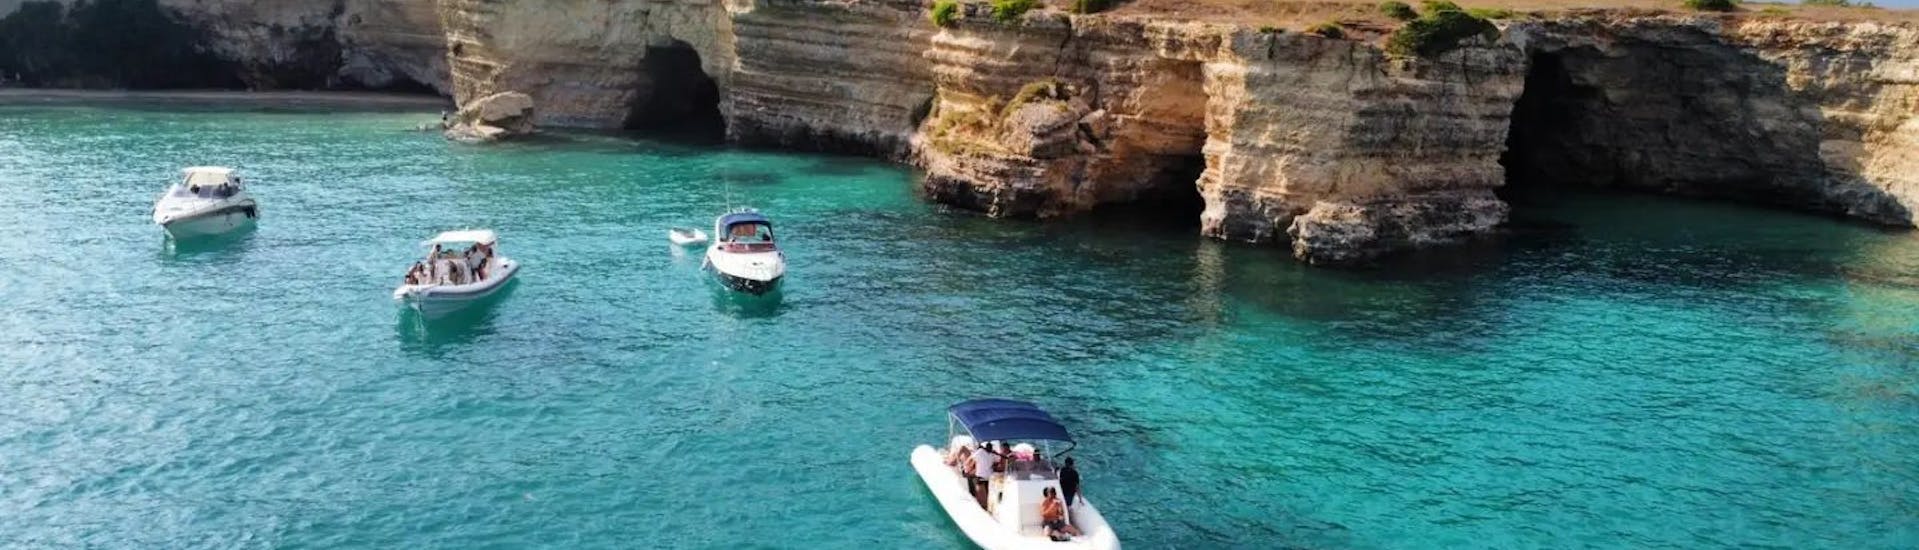 RIB Boat Trip from Otranto to Grotta Zinzulusa with Apéritif.